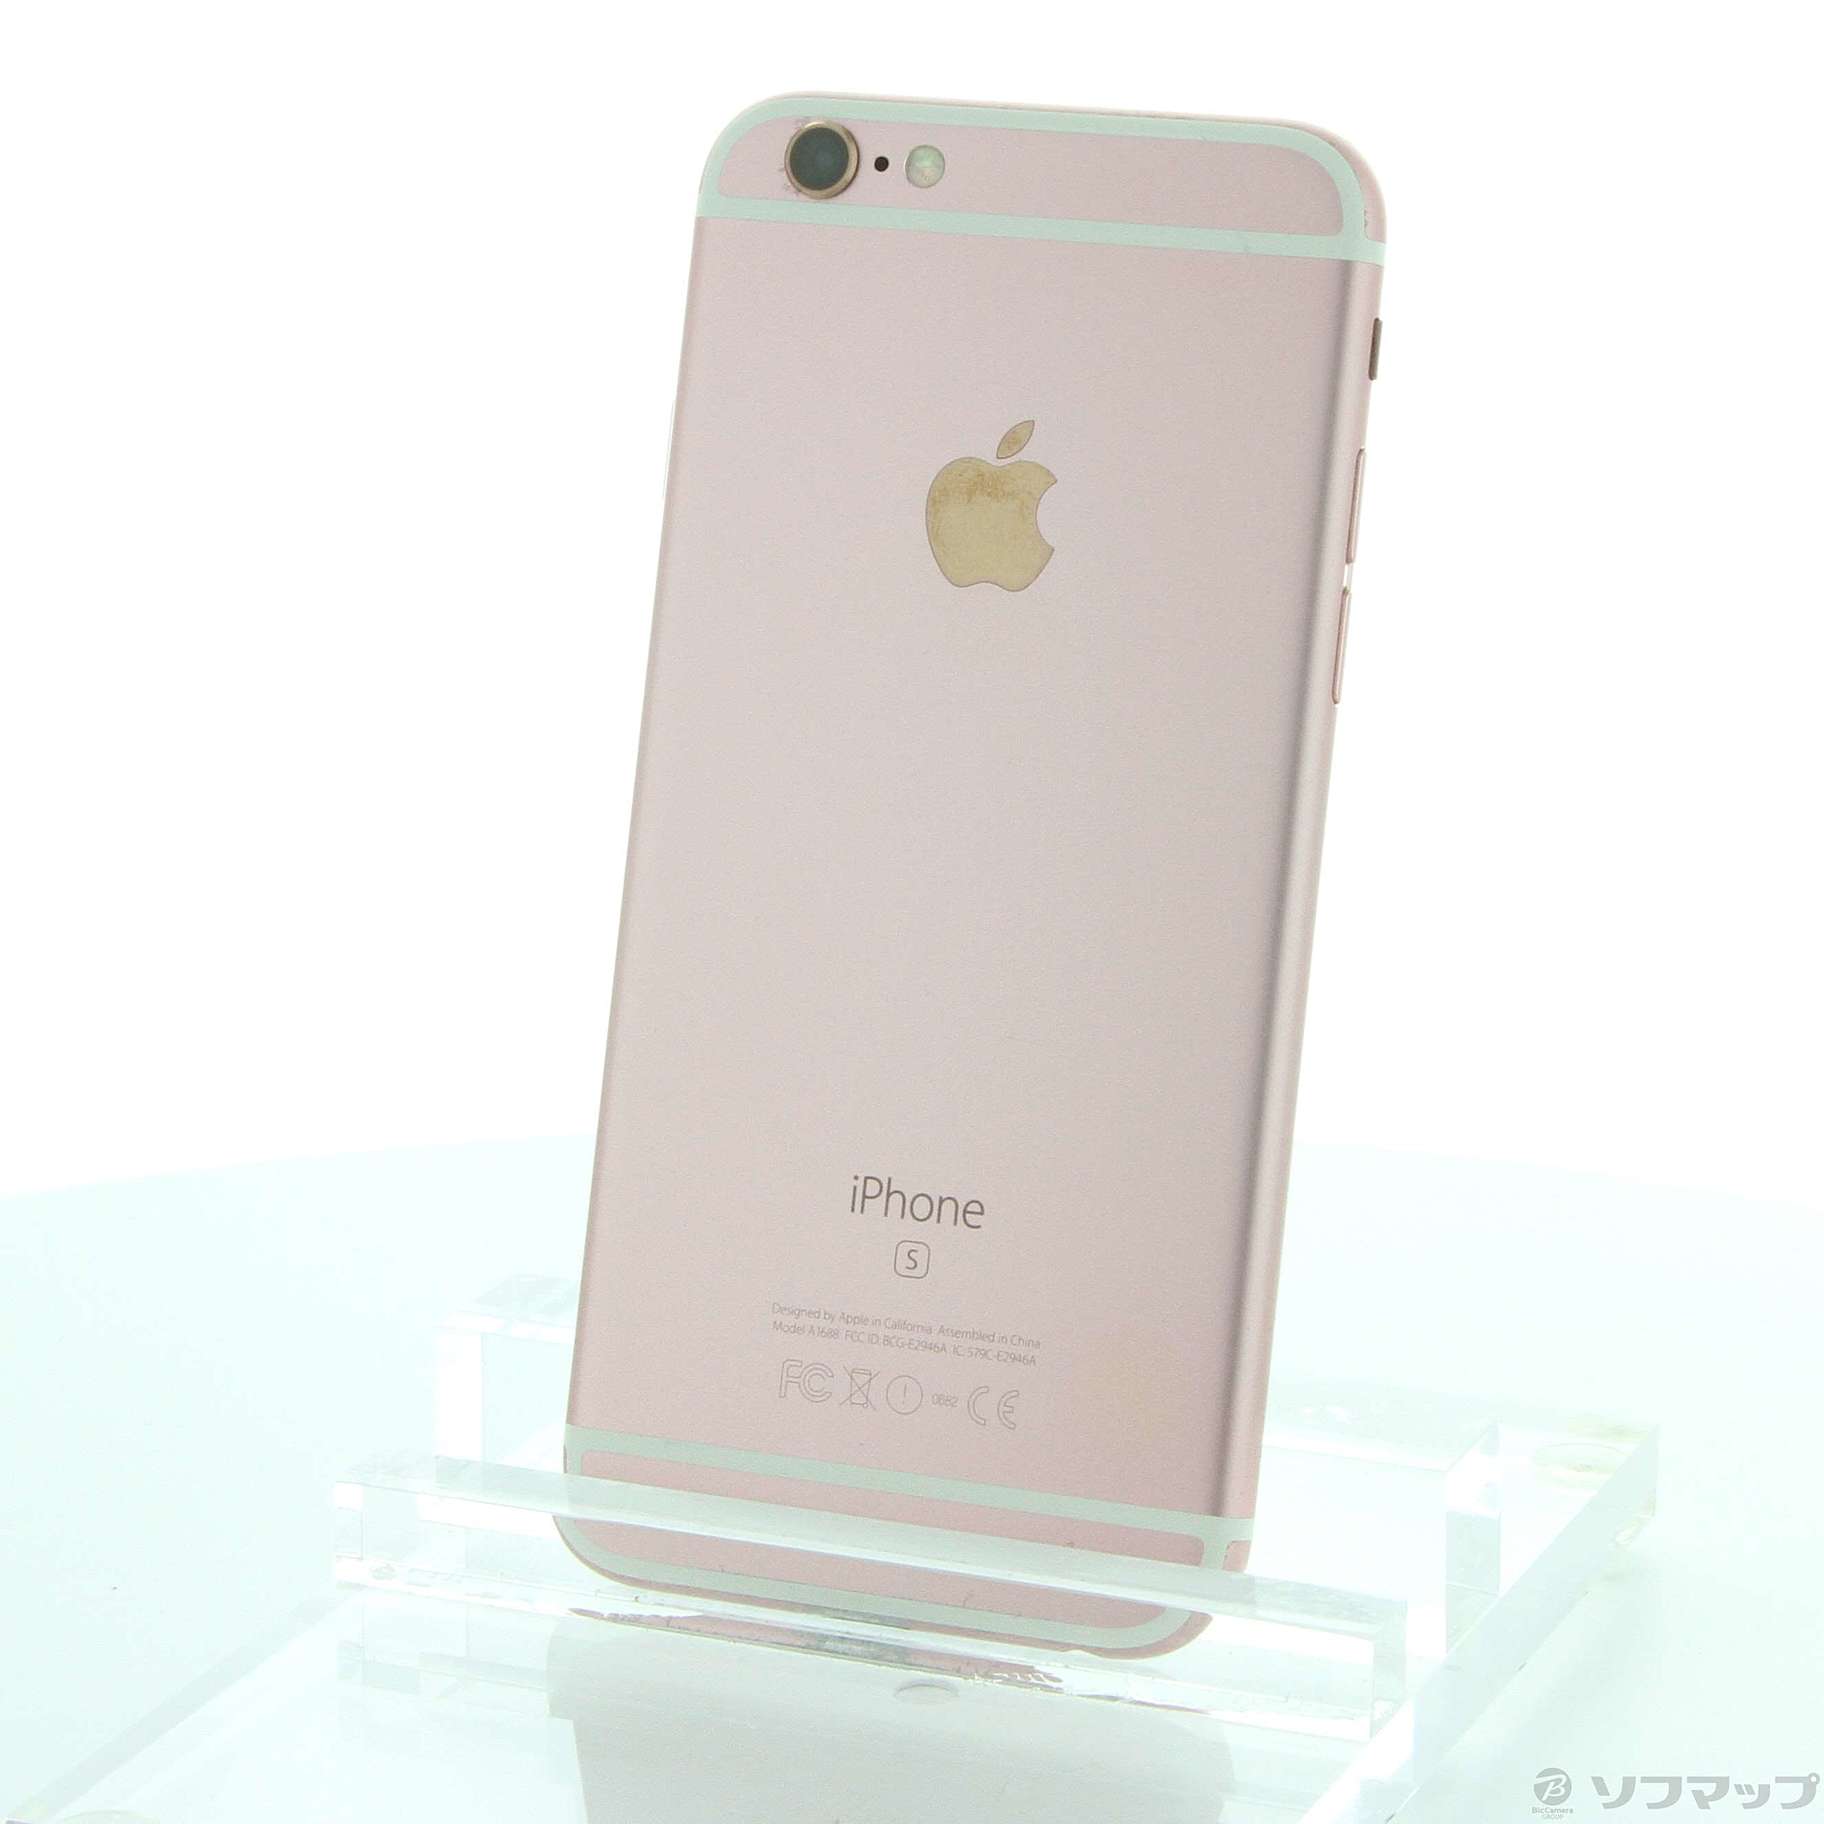 iPhone 6s Rose Gold 16 GB SIMフリー値下げ不可